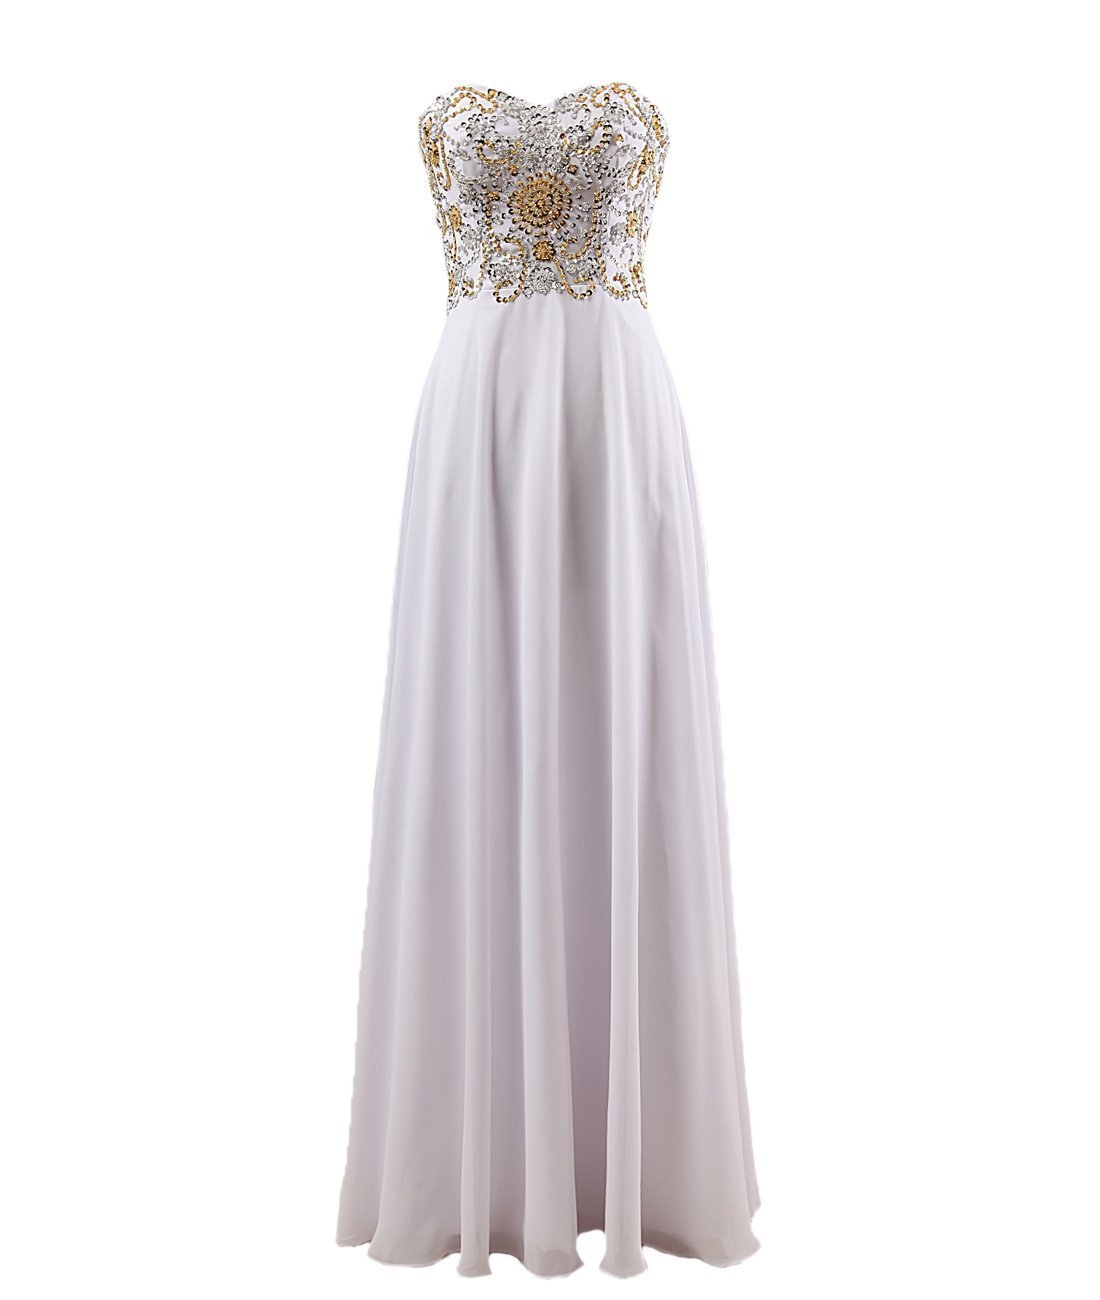 Strapless A-line White Chiffon Prom Dress Beaded Floor Length Women Evening Dress 2019